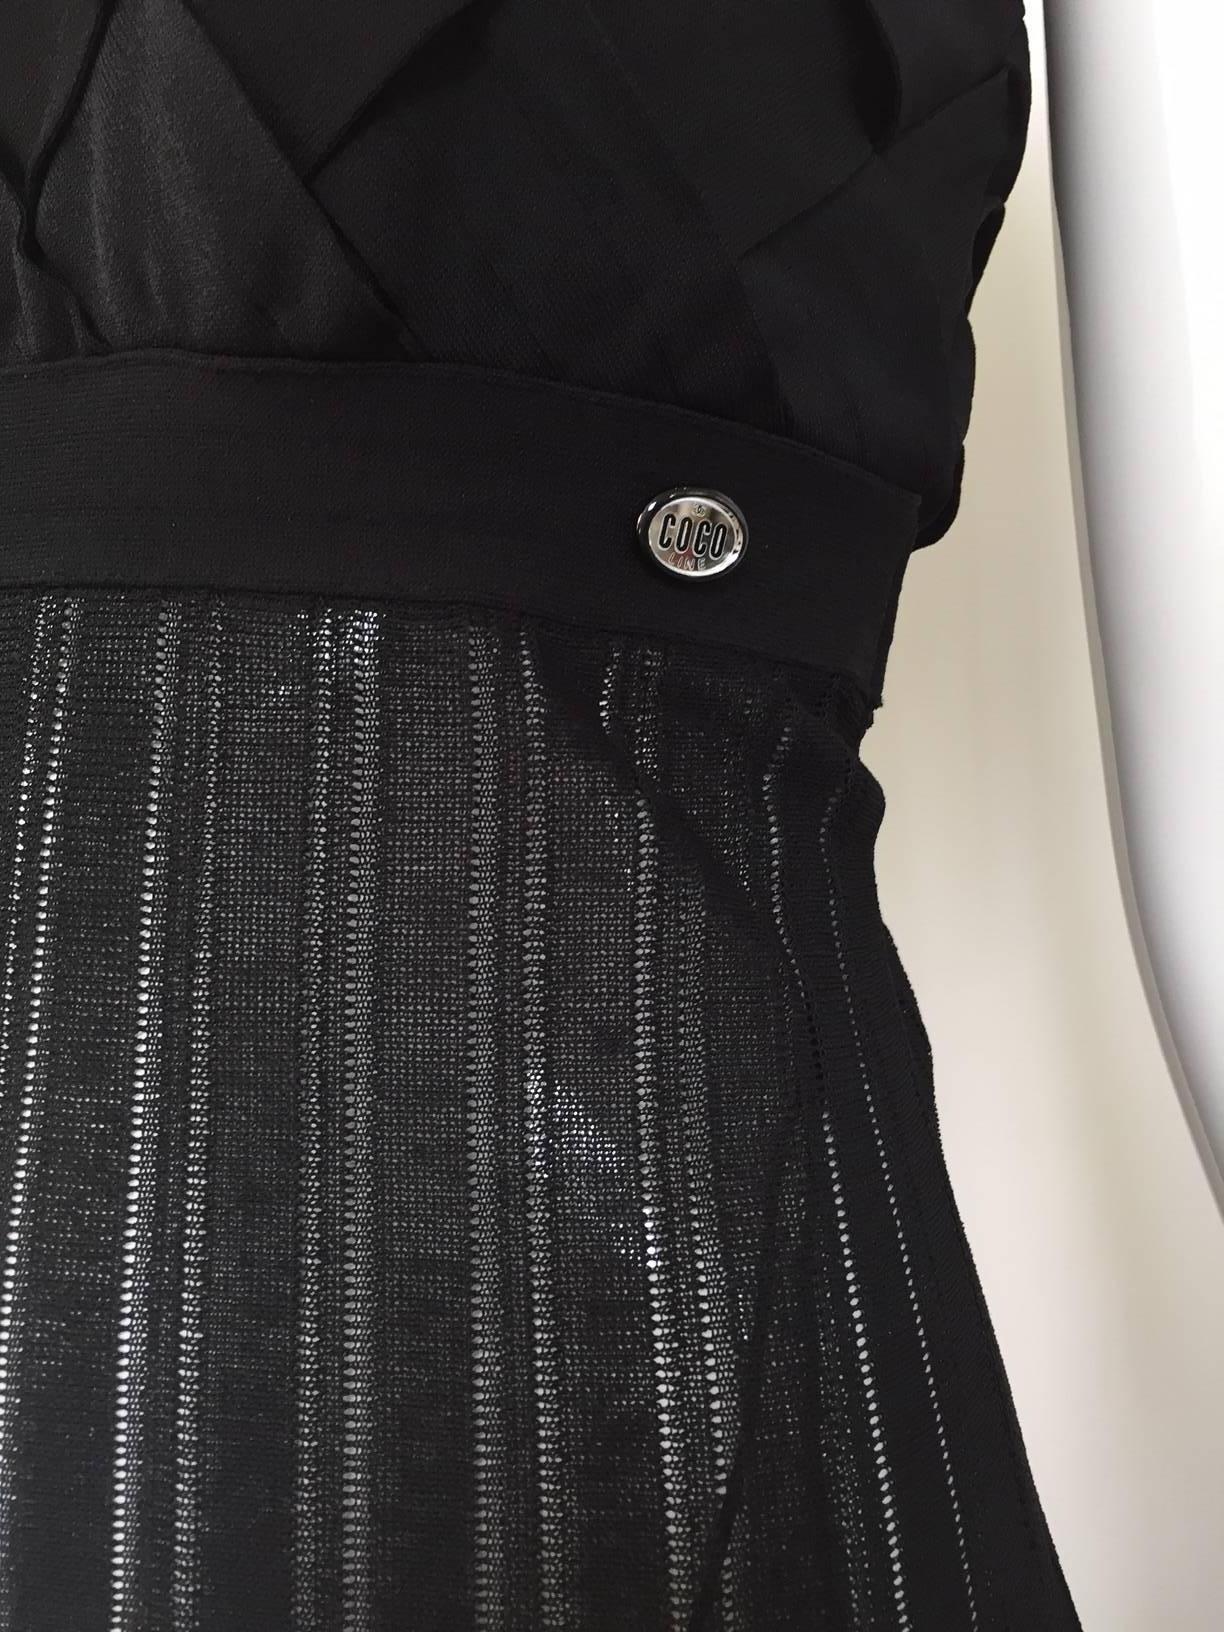  Chanel Black Knit Maxi Dress 2